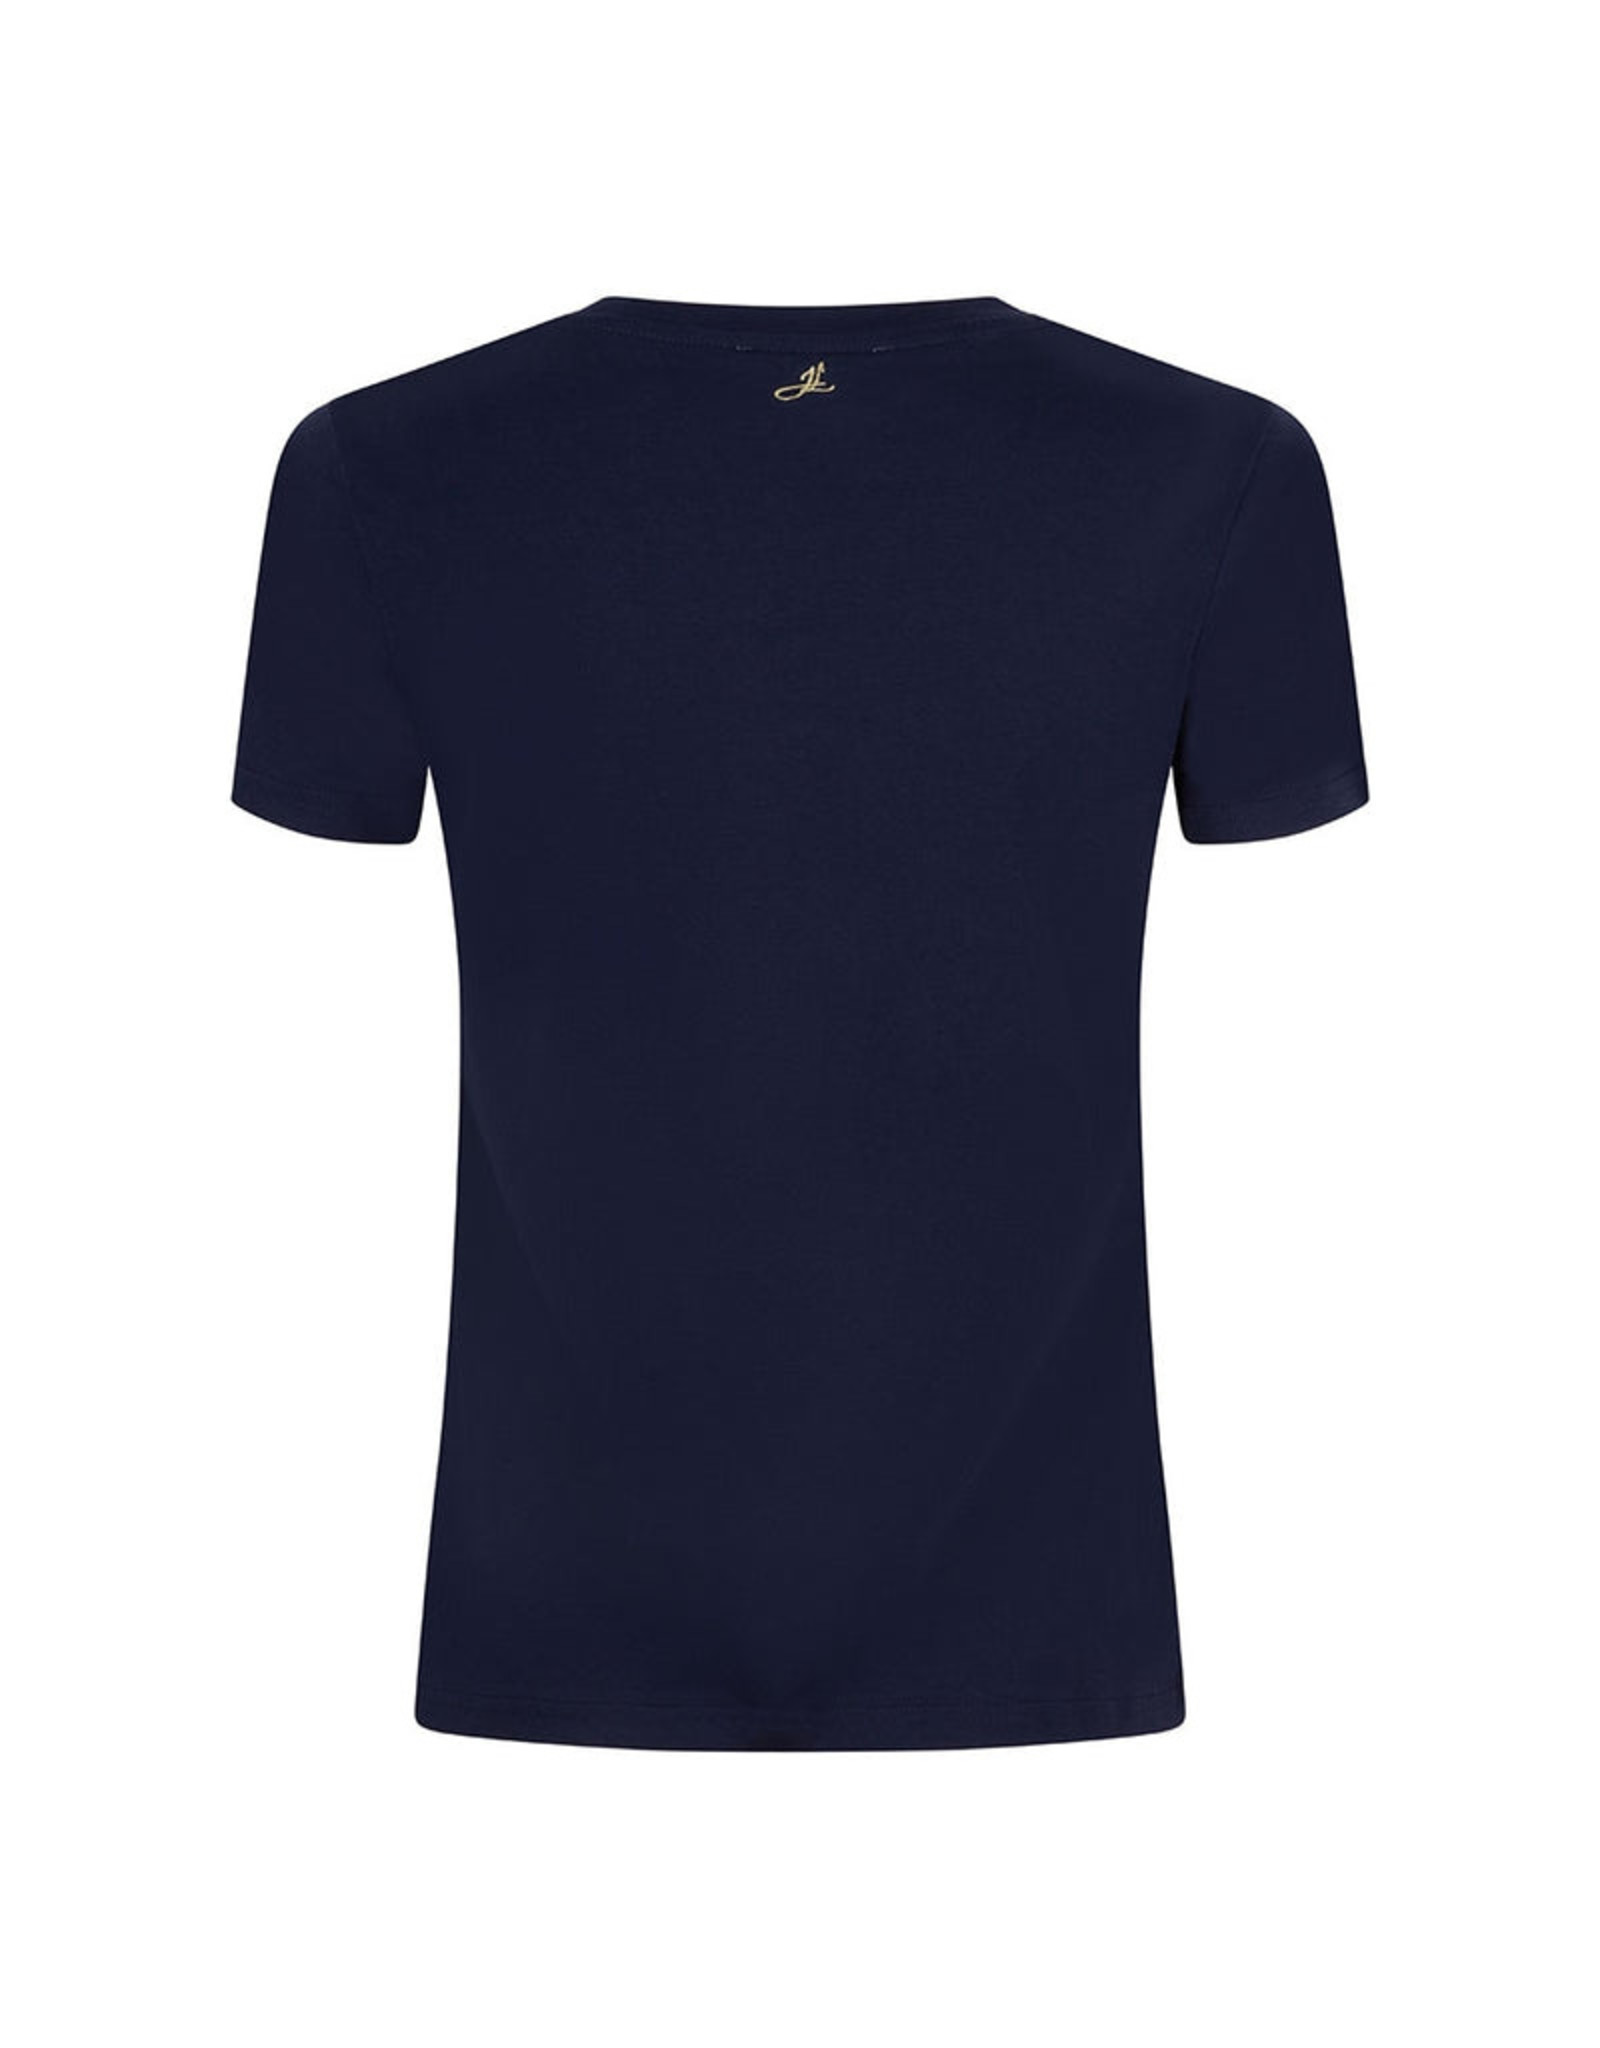 Jacky Luxury T-Shirt Navy JL220107